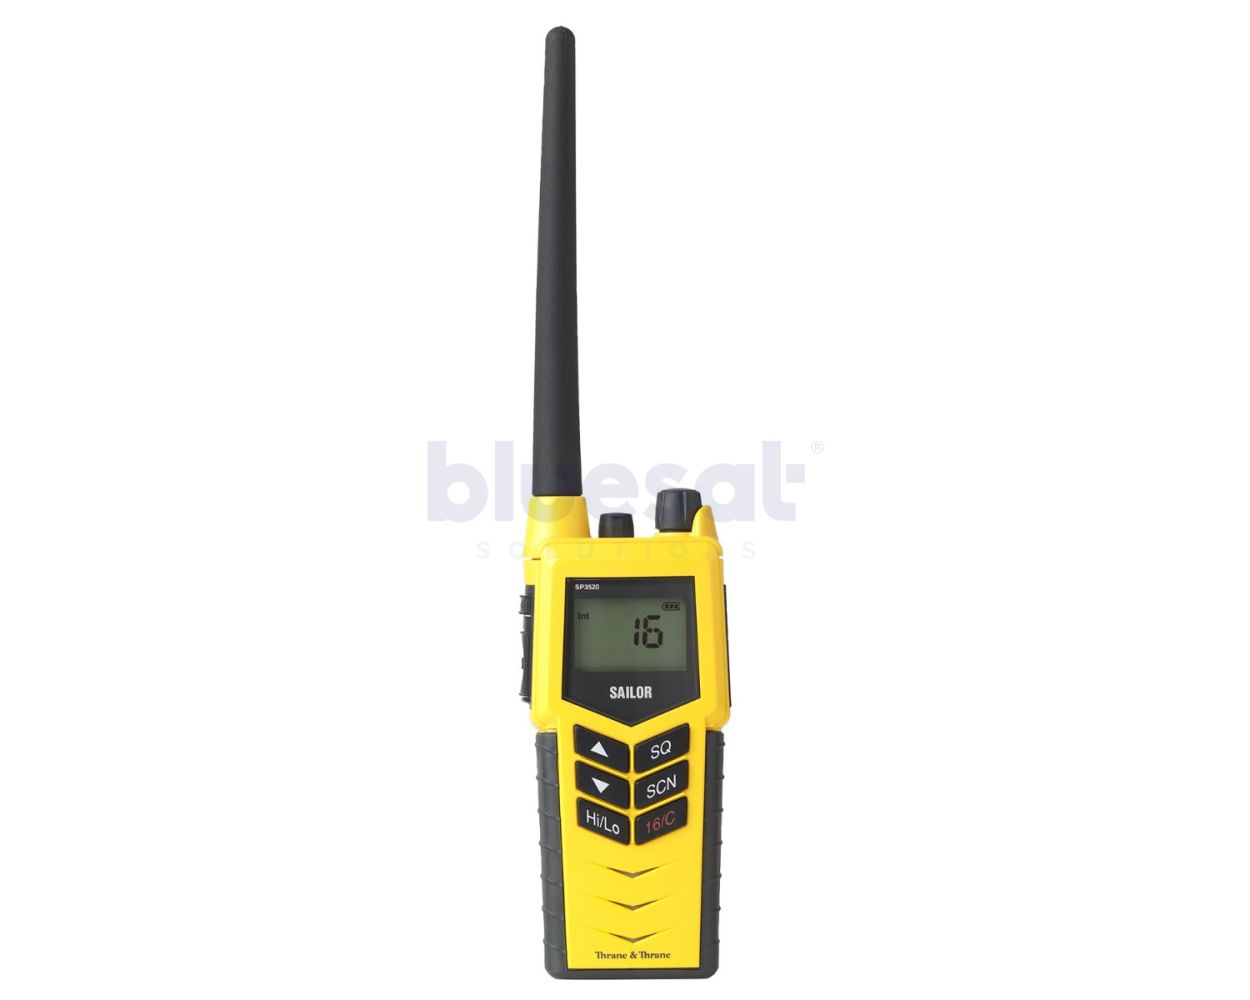 SAILOR SP3520B Portable VHF